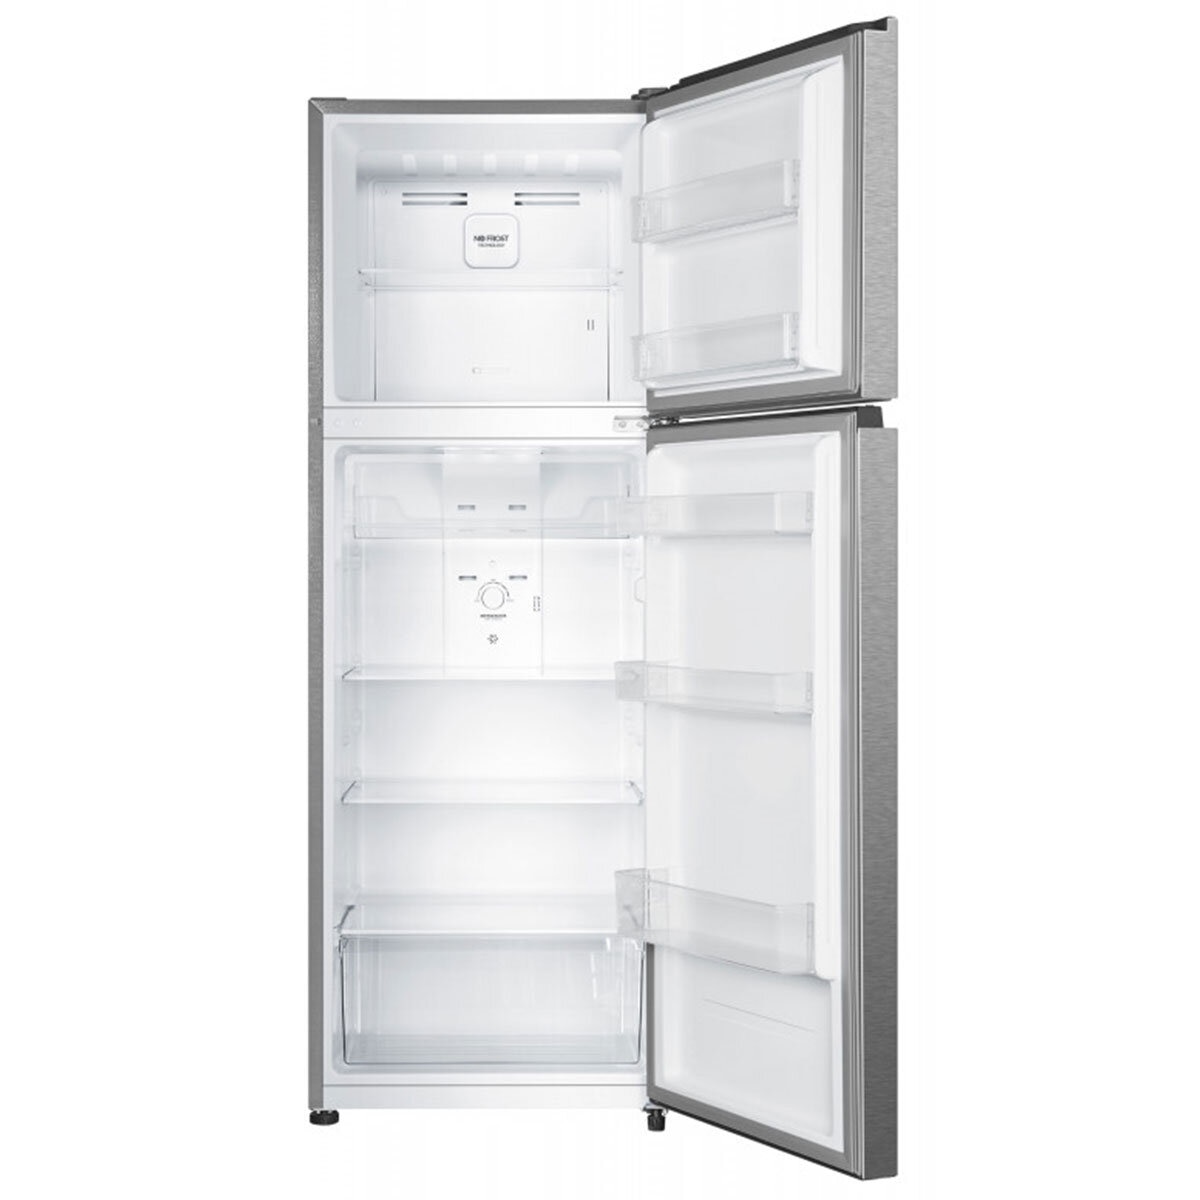 Hisense 326L Top Mount Refrigerator Stainless HRTF326S